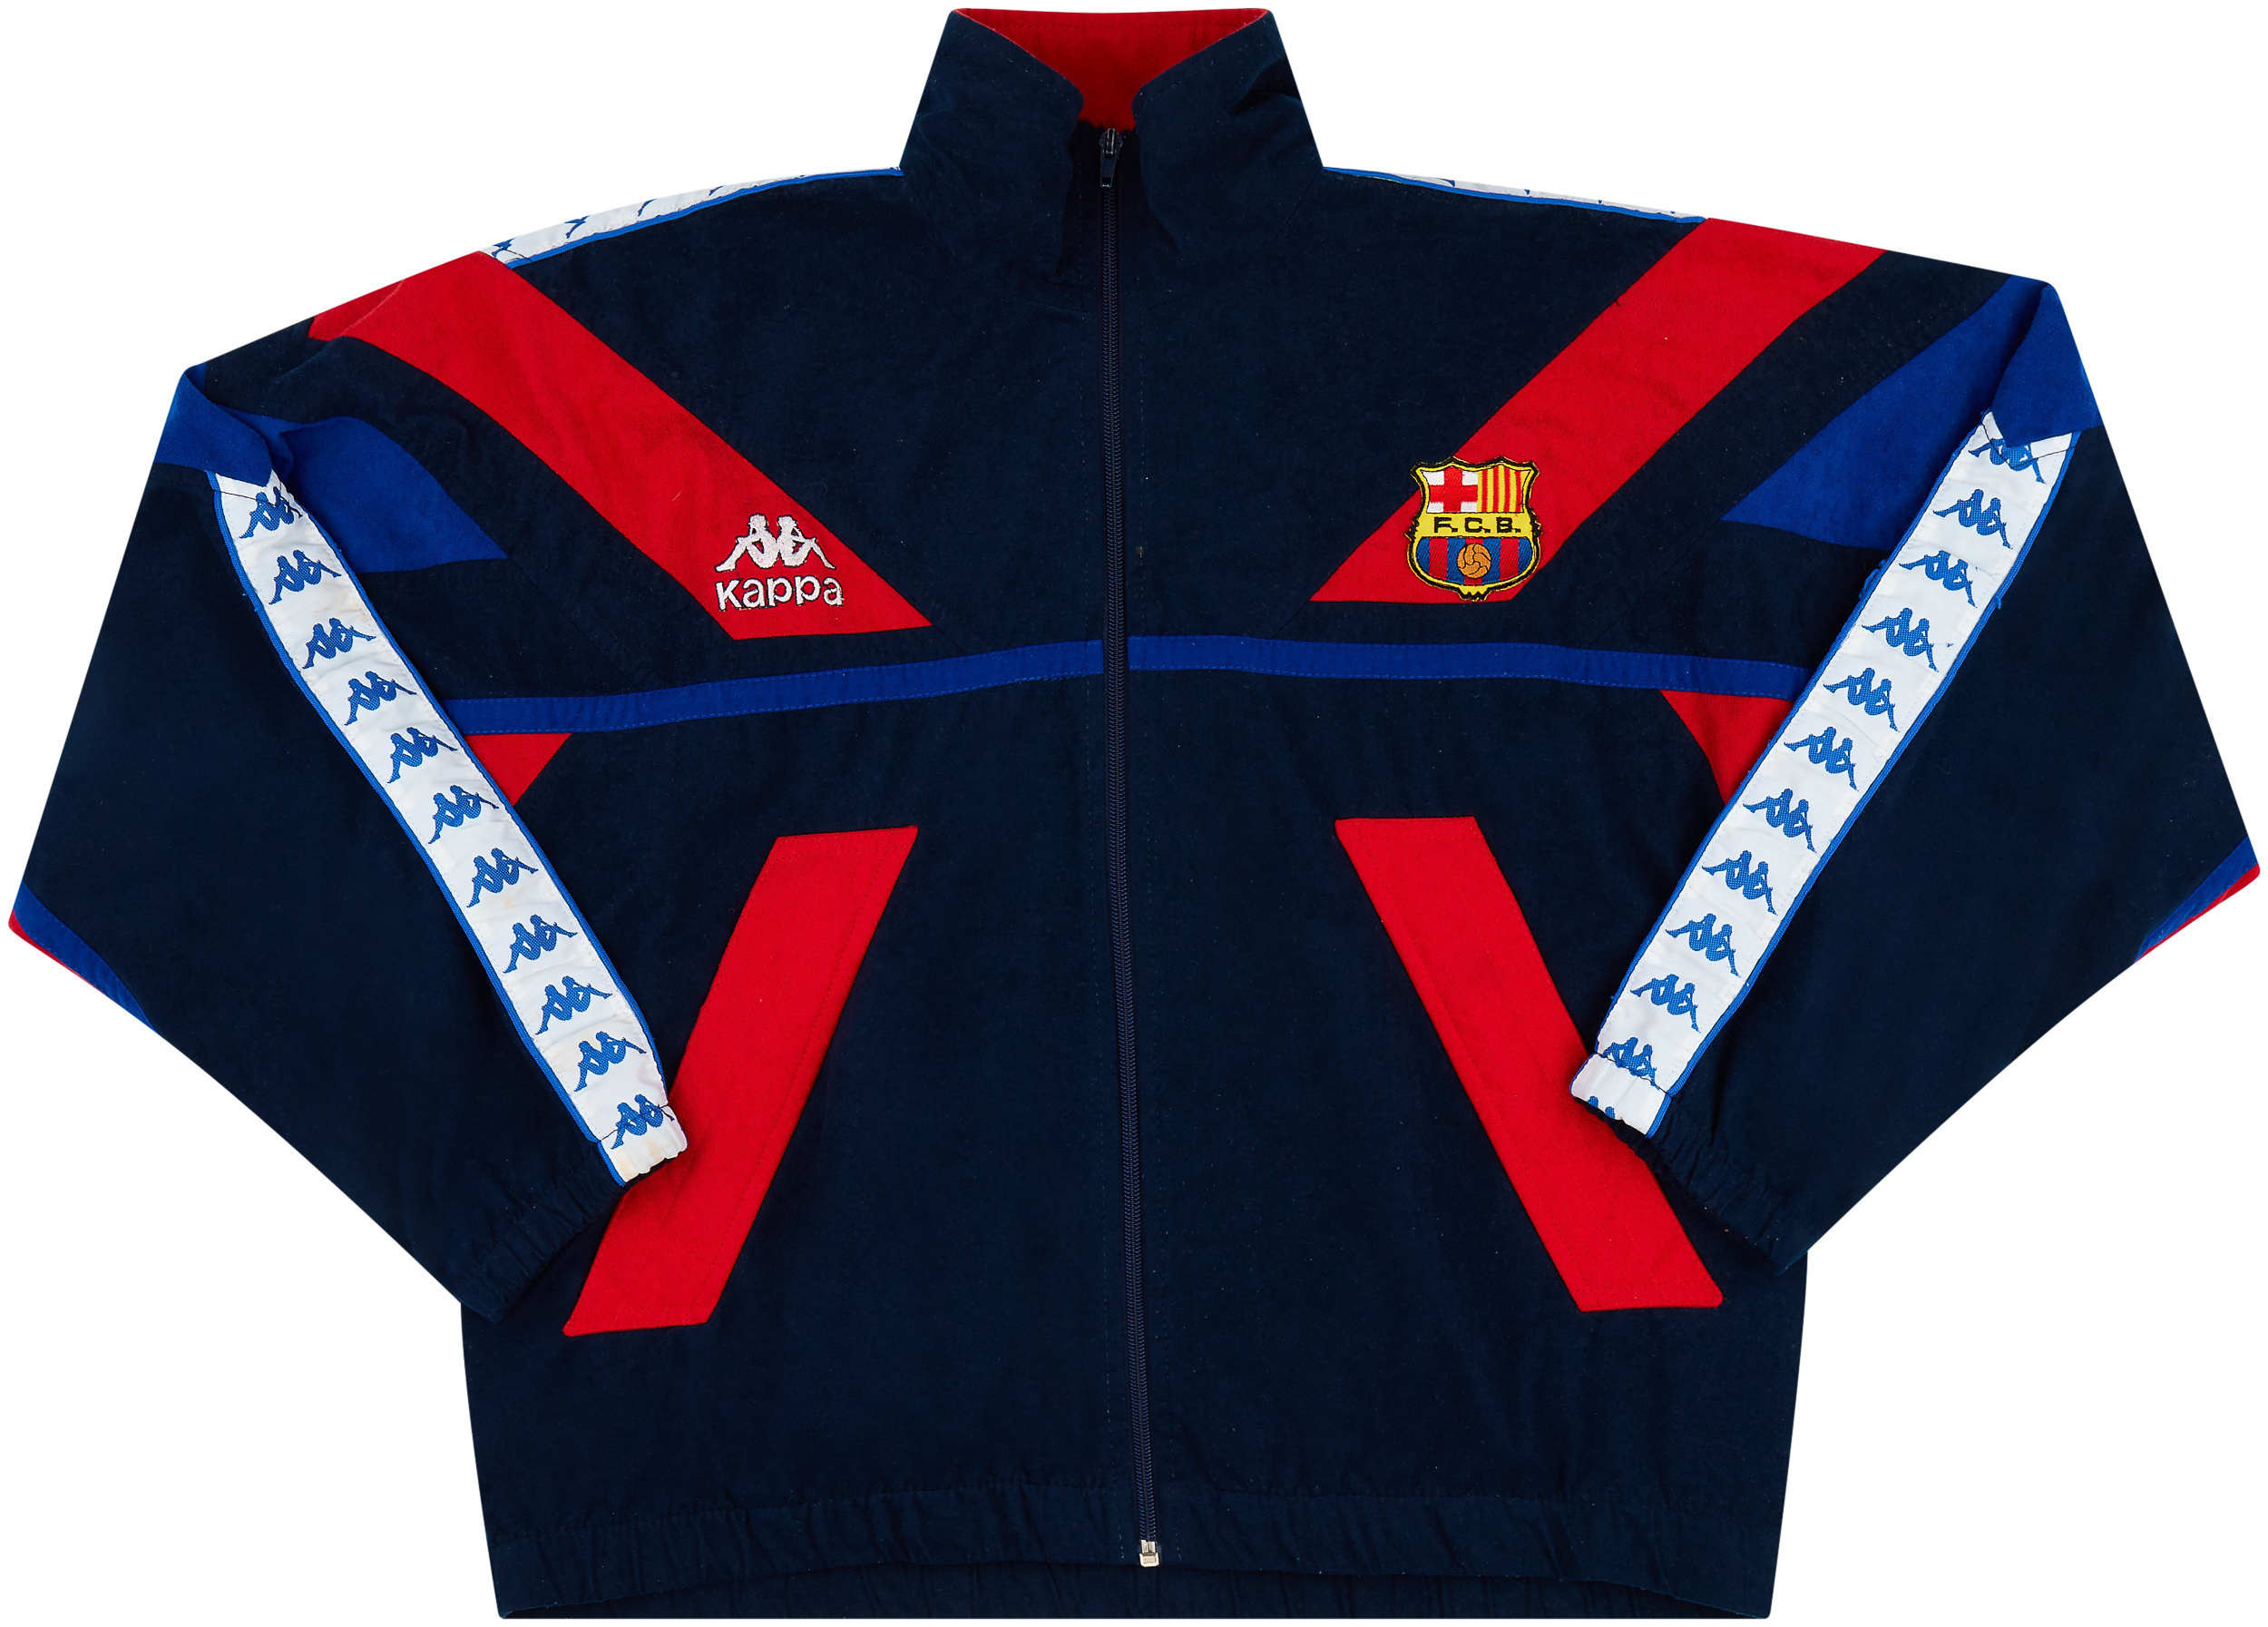 1992-95 Barcelona Kappa Track Jacket - Very Good 7/10 - (L)